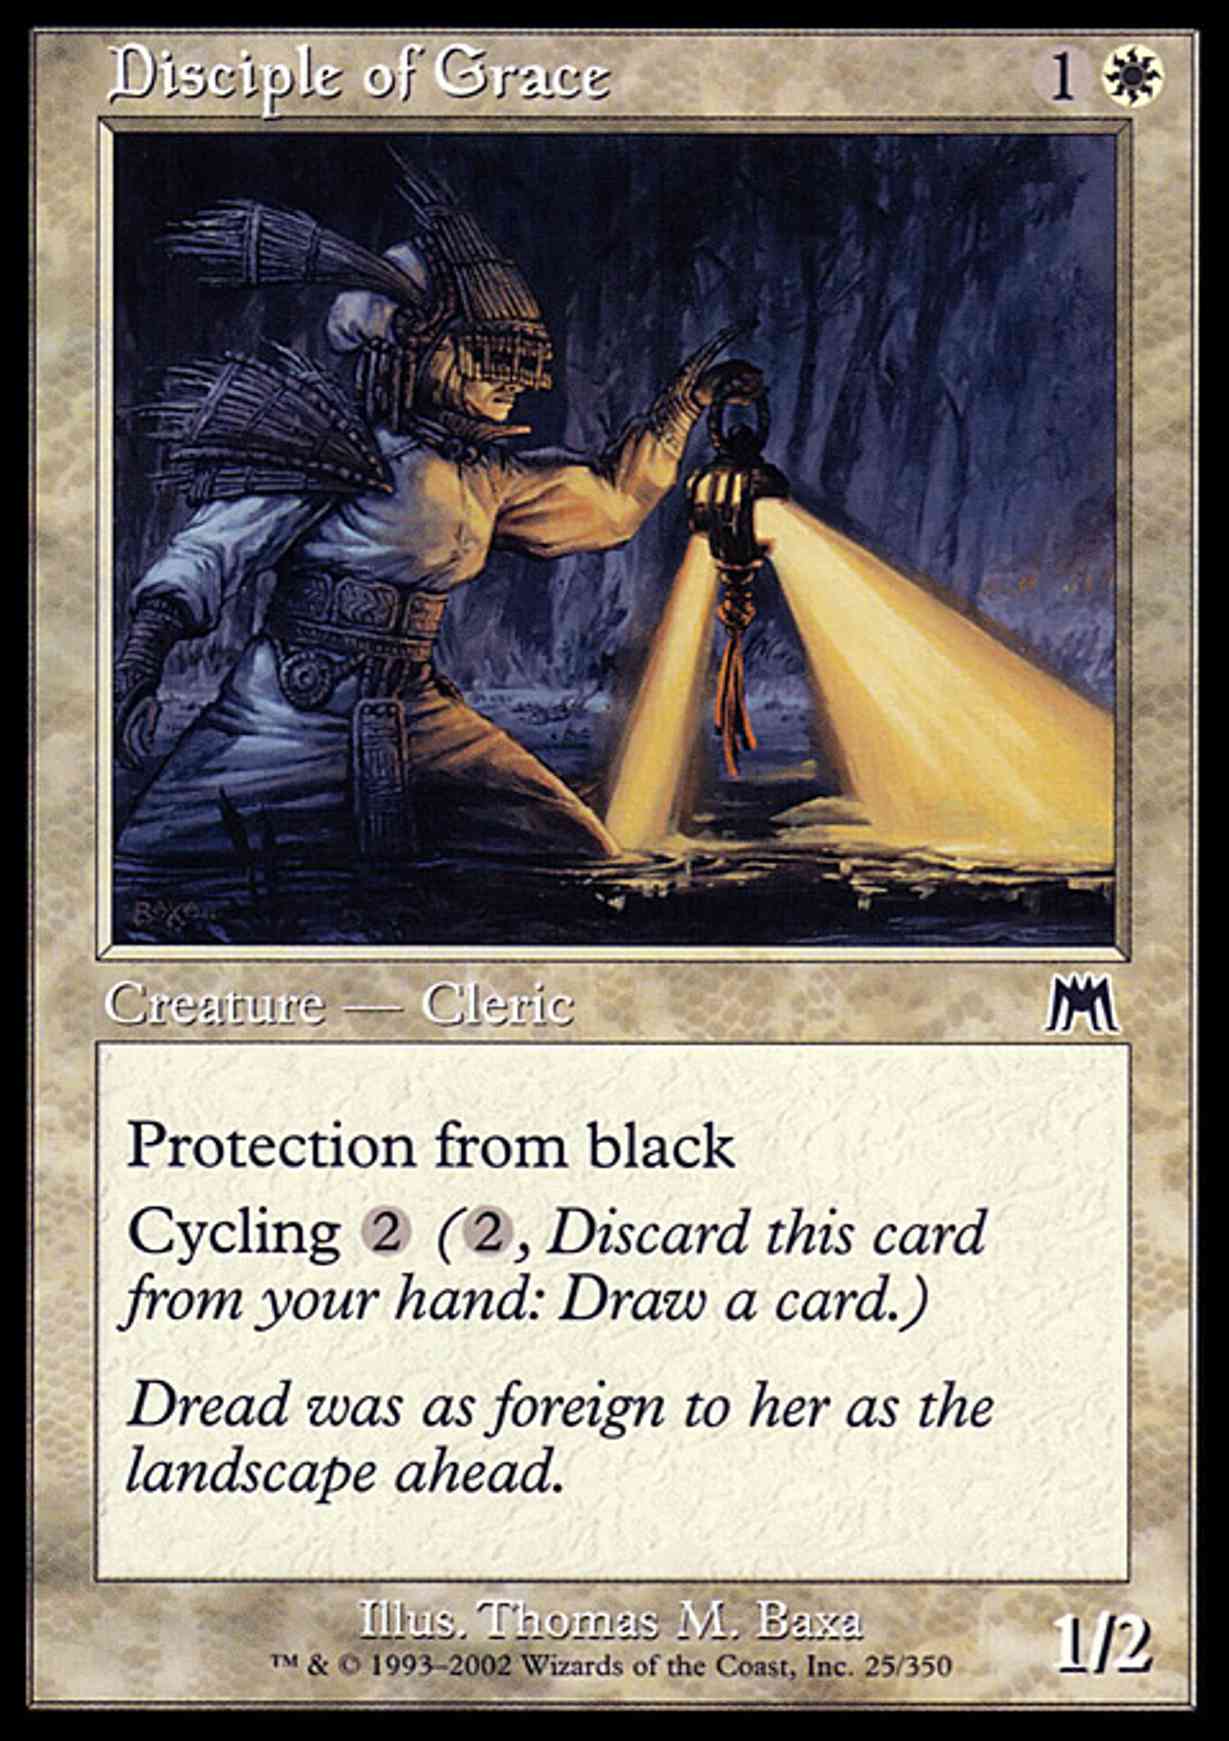 Disciple of Grace magic card front